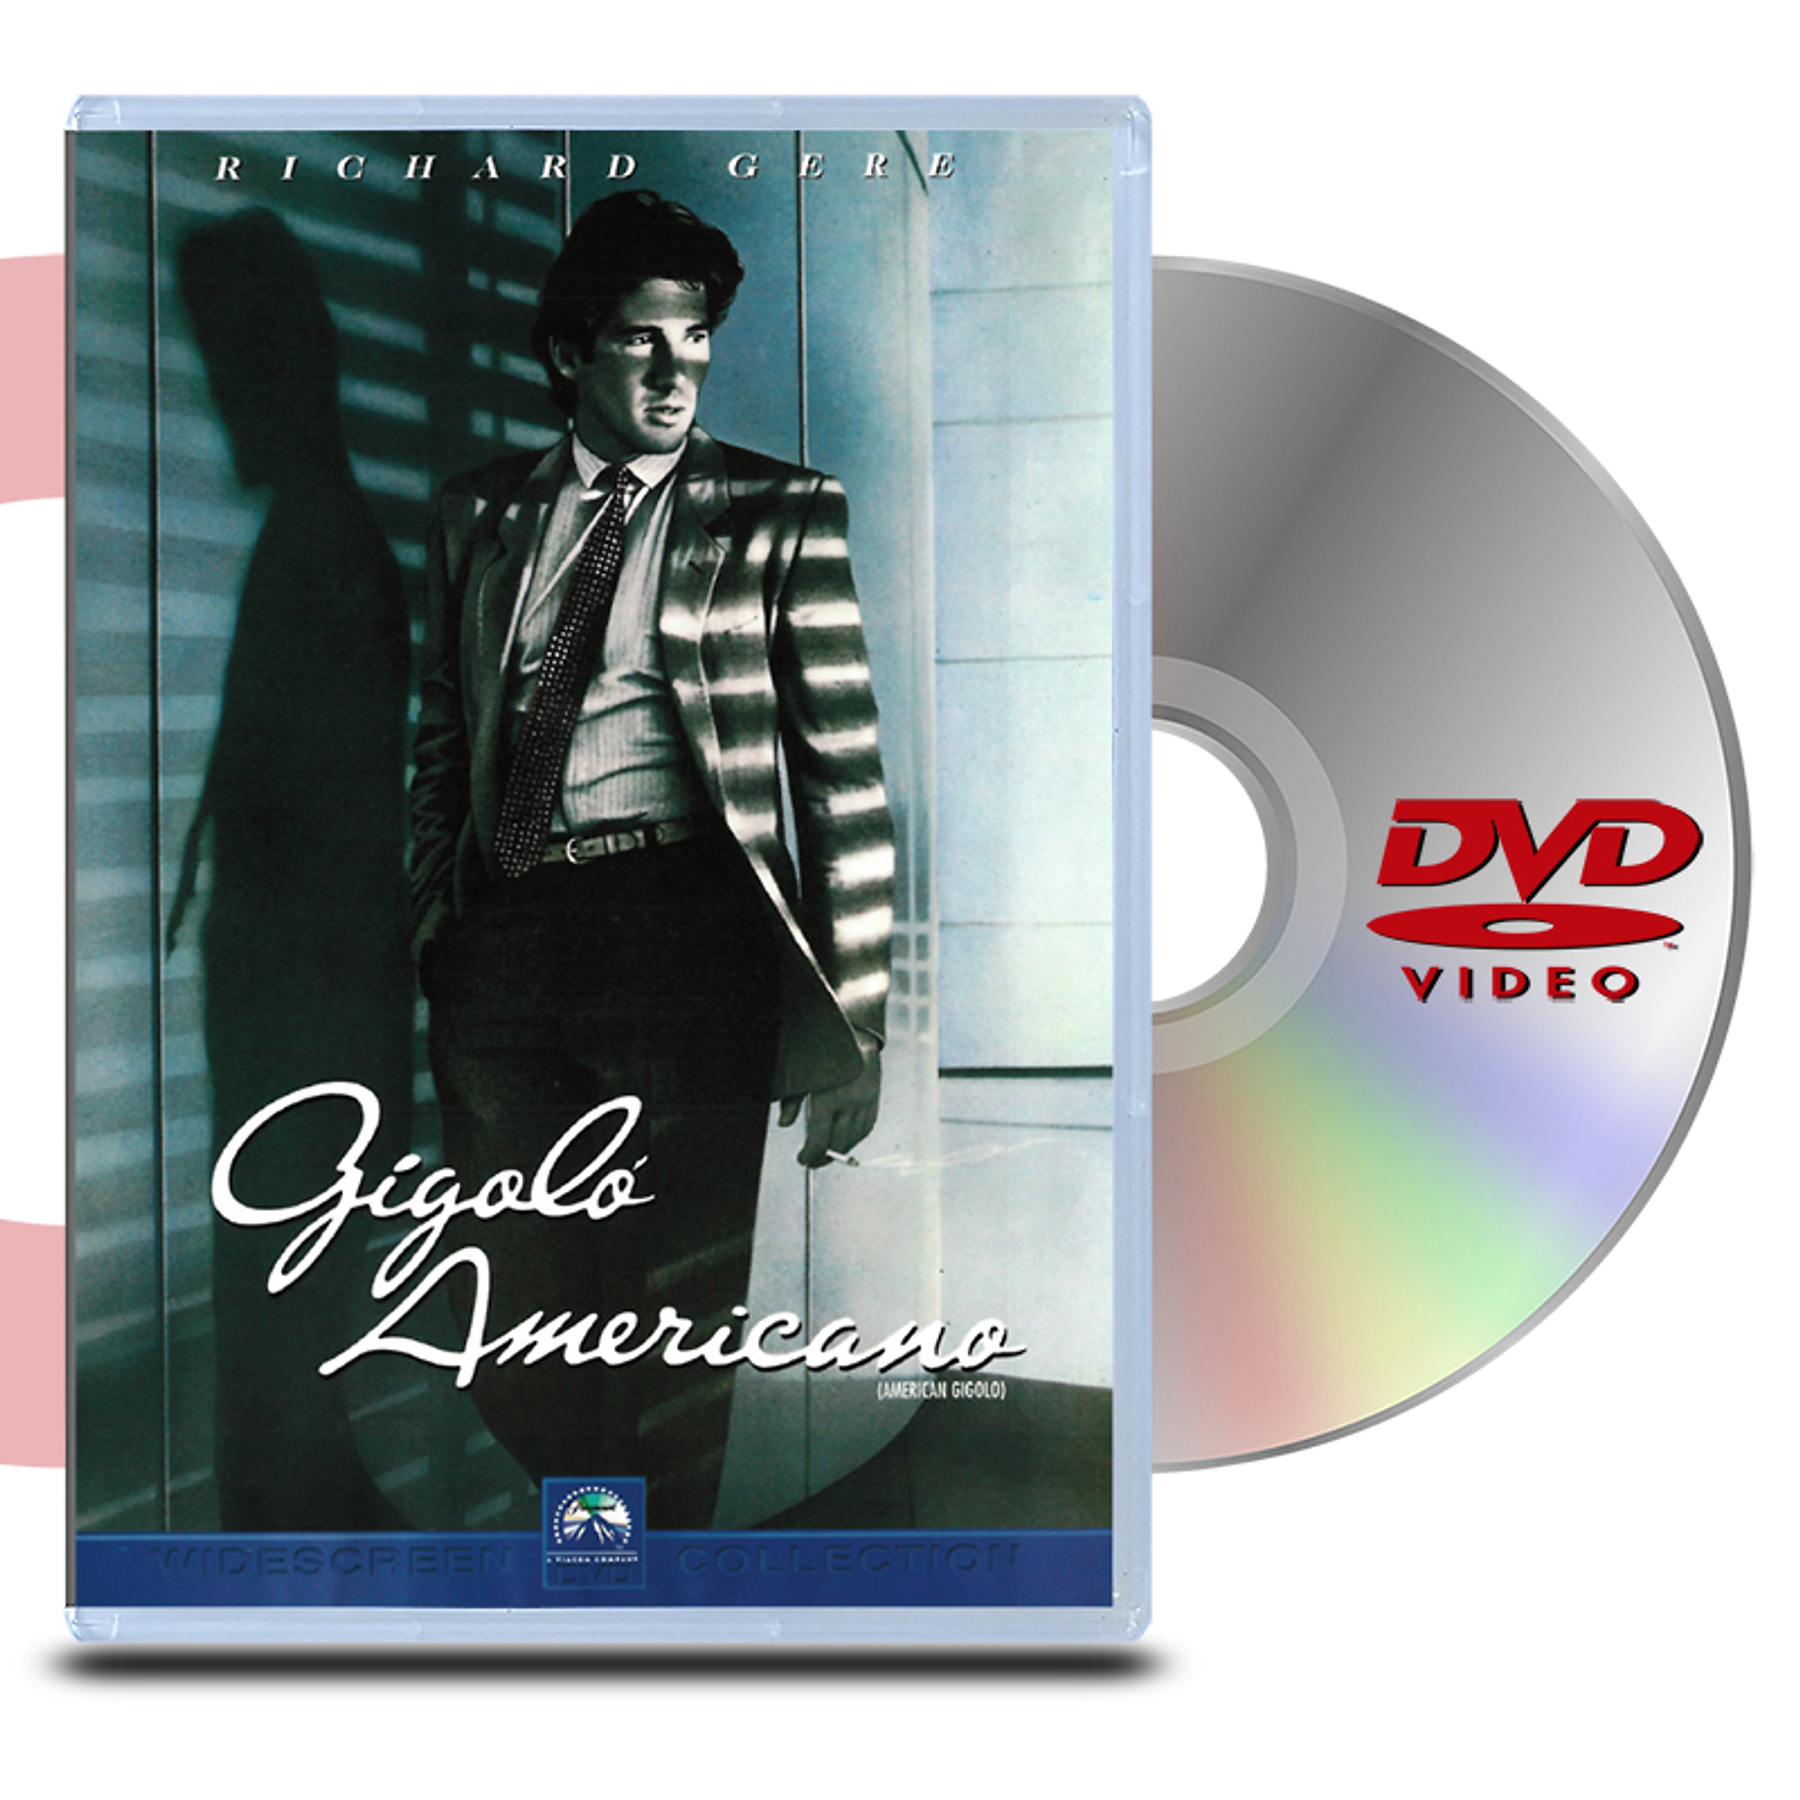 DVD GIGOLO AMERICANO